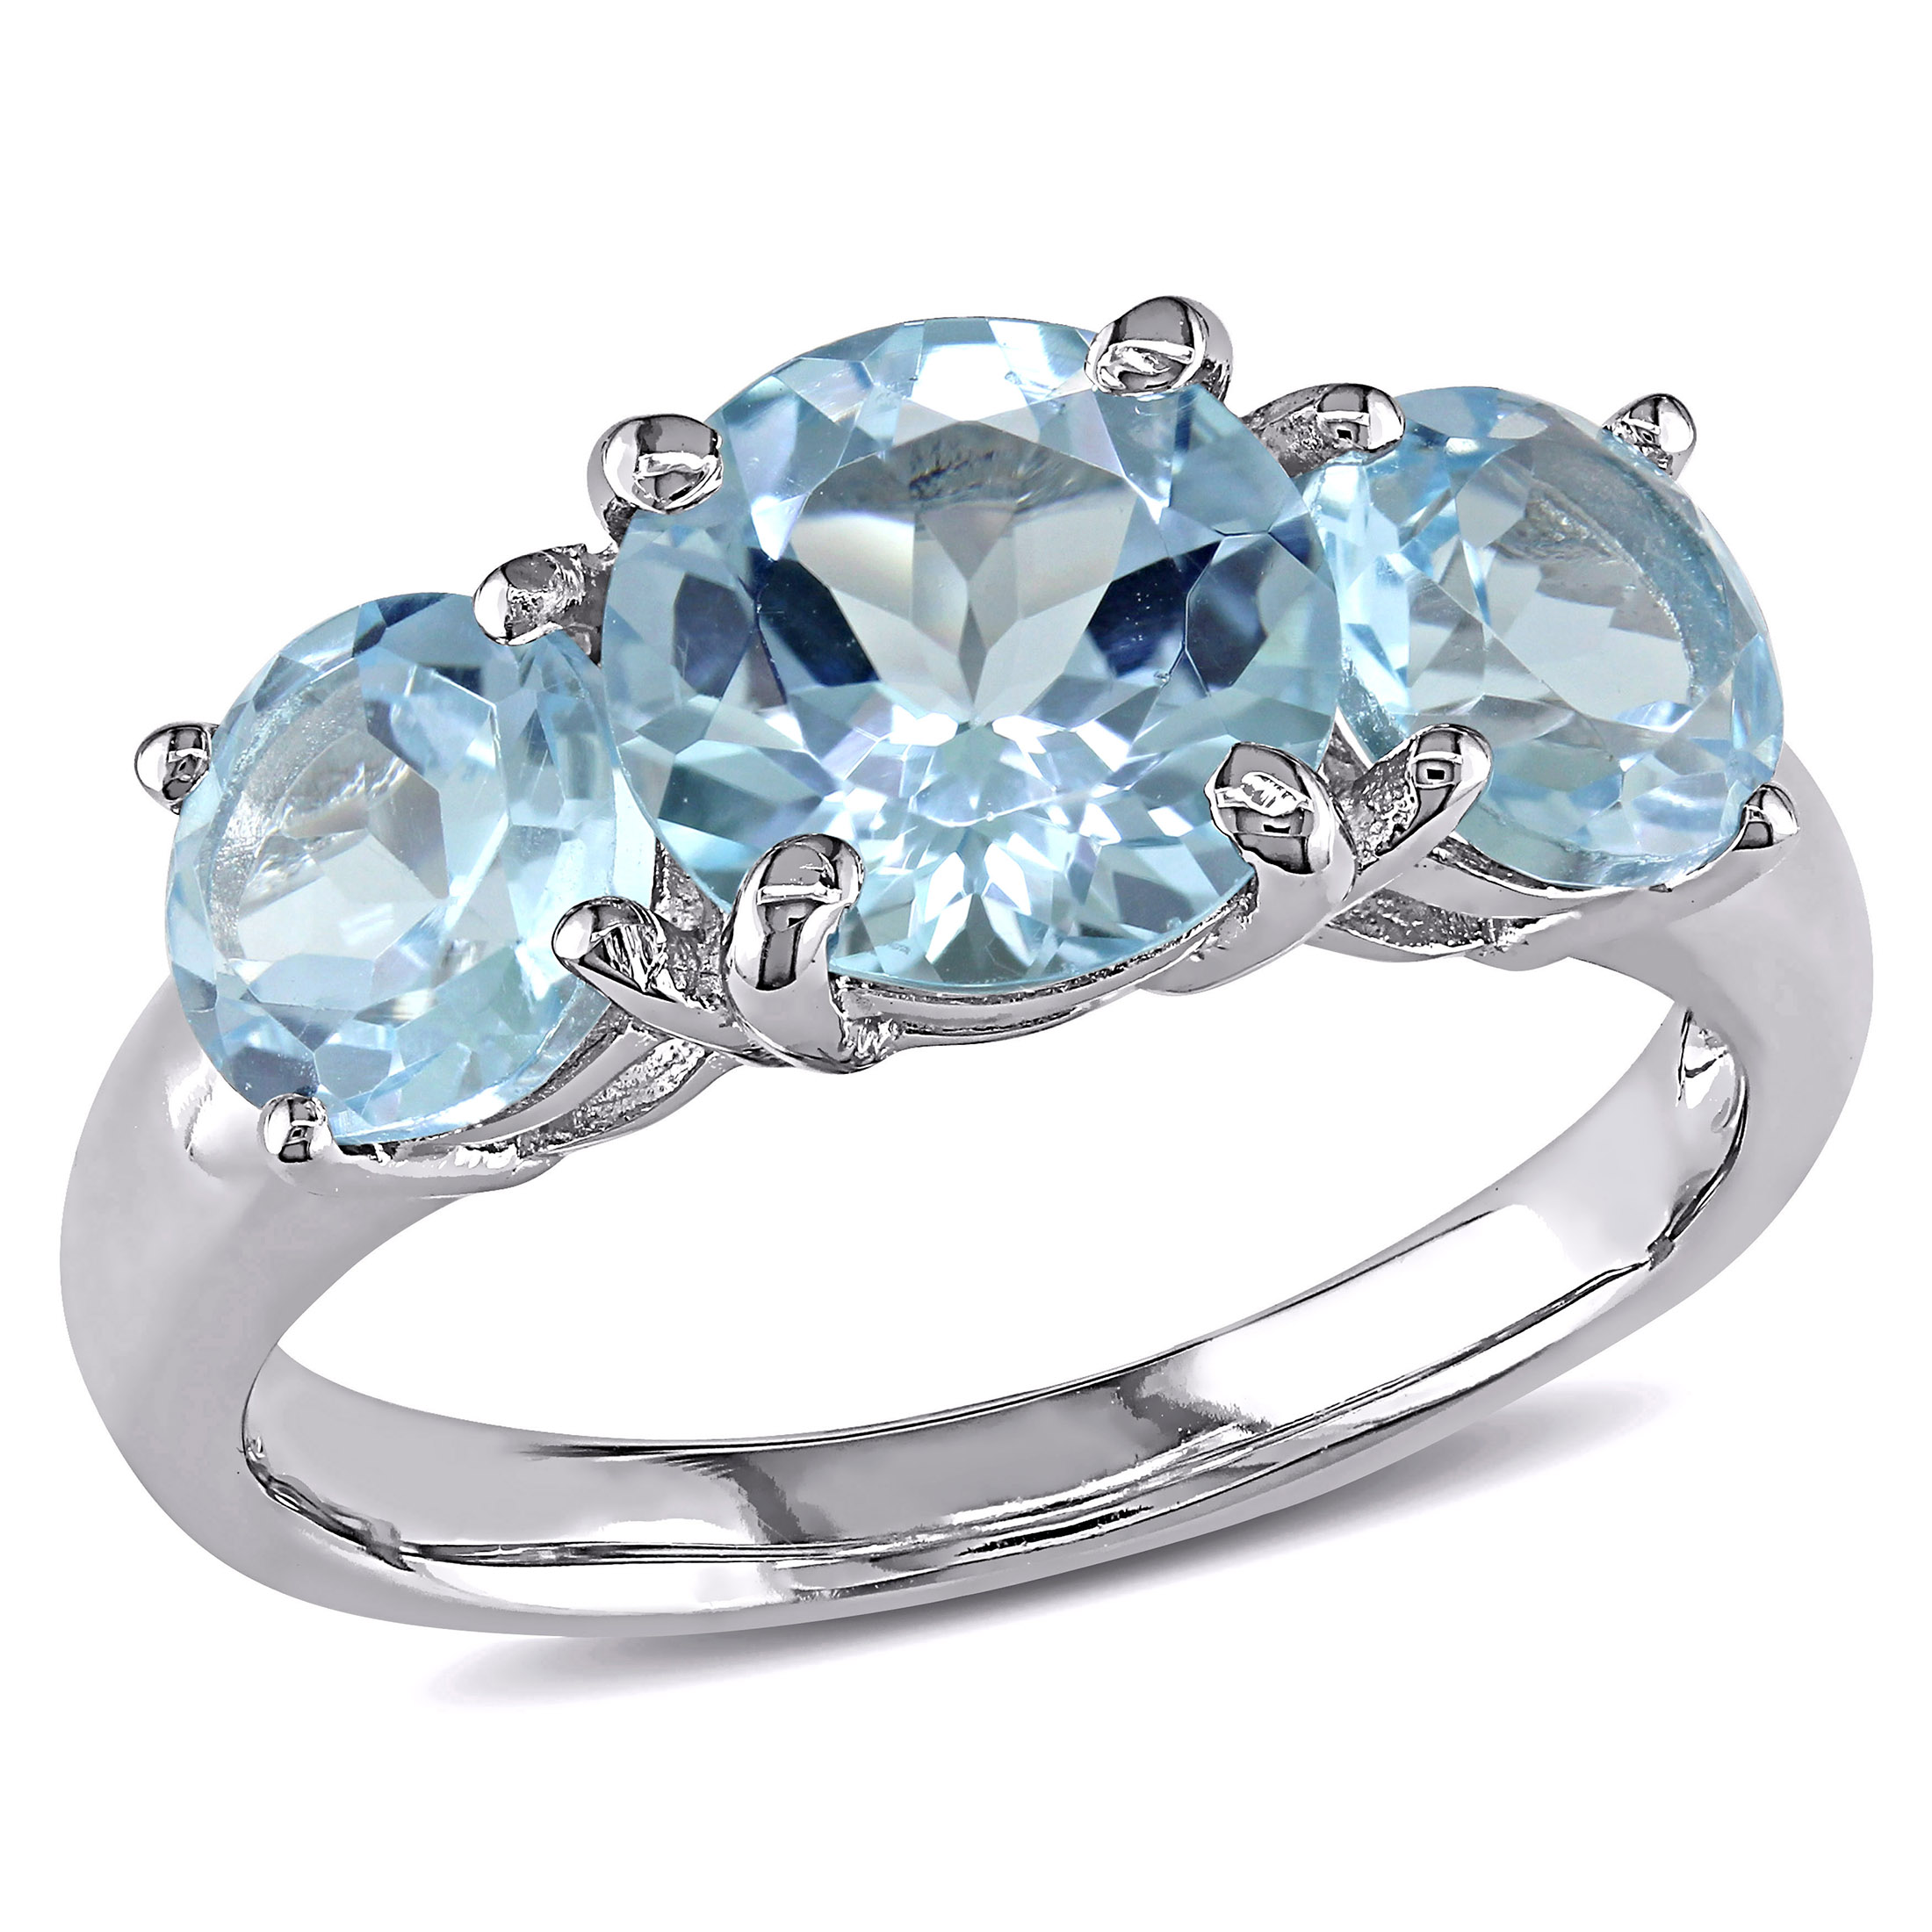 Miabella Women's 4-3/8 Carat T.G.W. Sky Blue Topaz Sterling Silver 3-Stone Ring - image 1 of 6